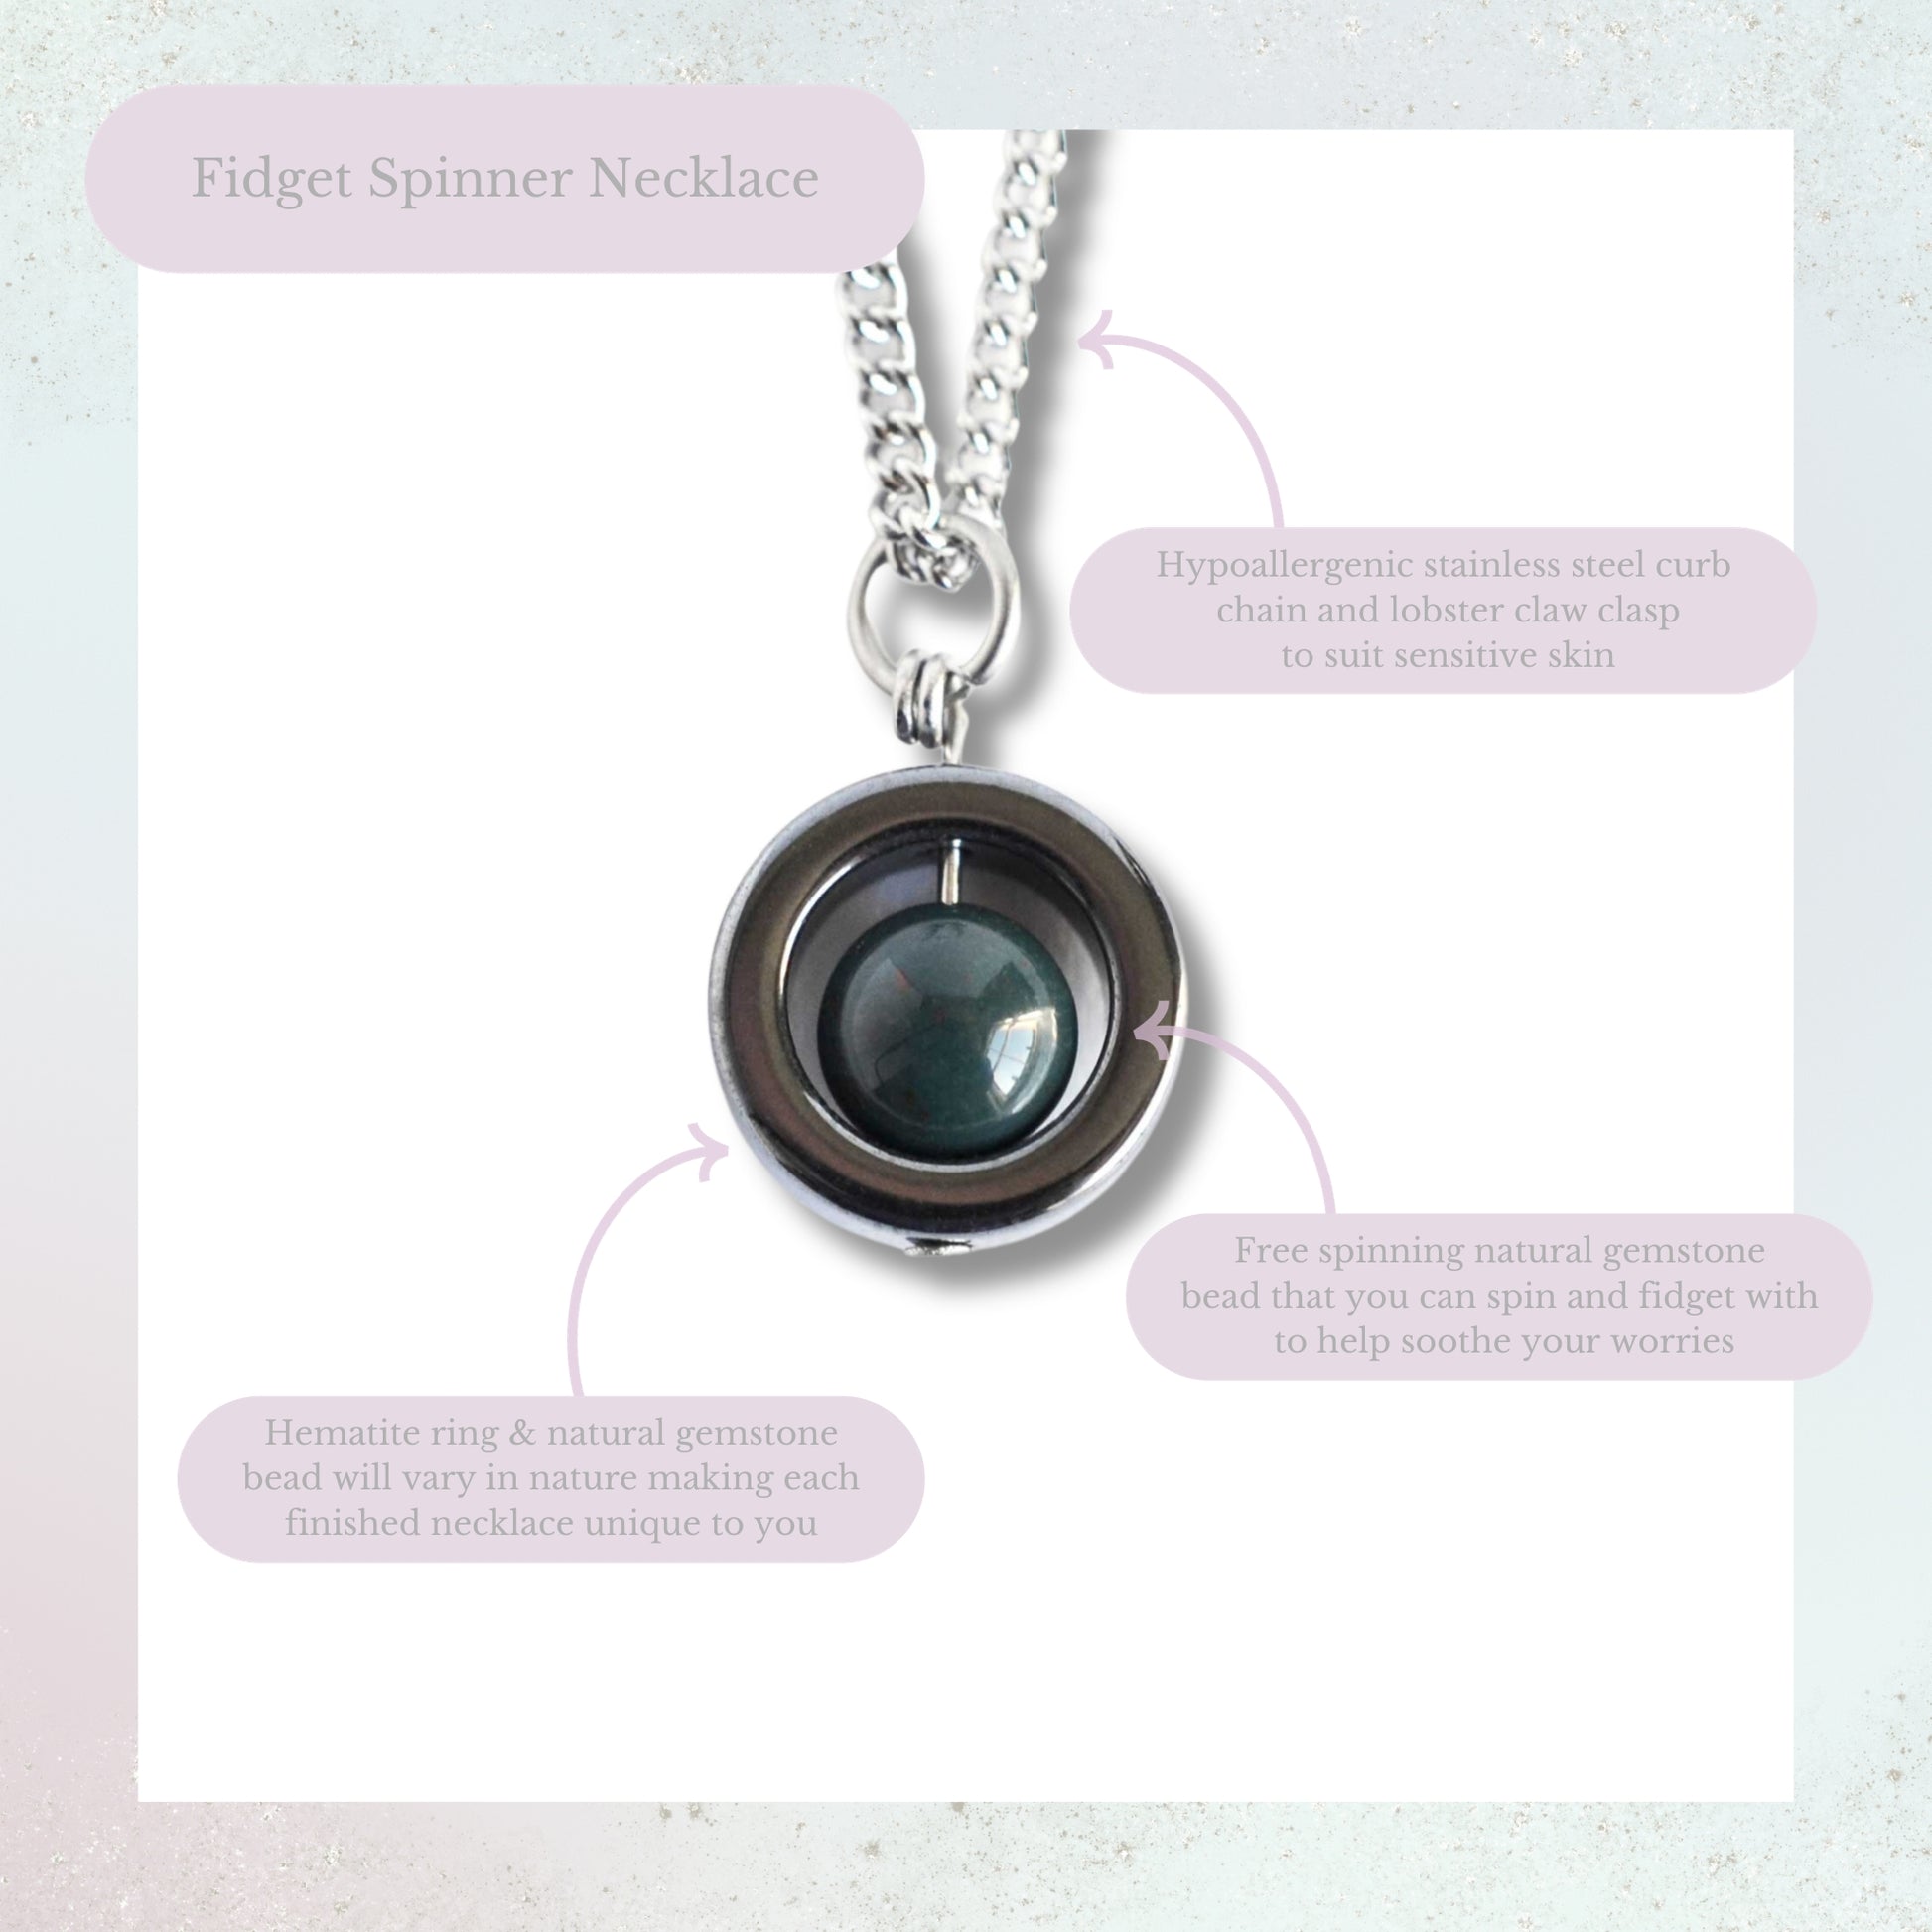 Gemstone fidget spinner necklace product information graphic